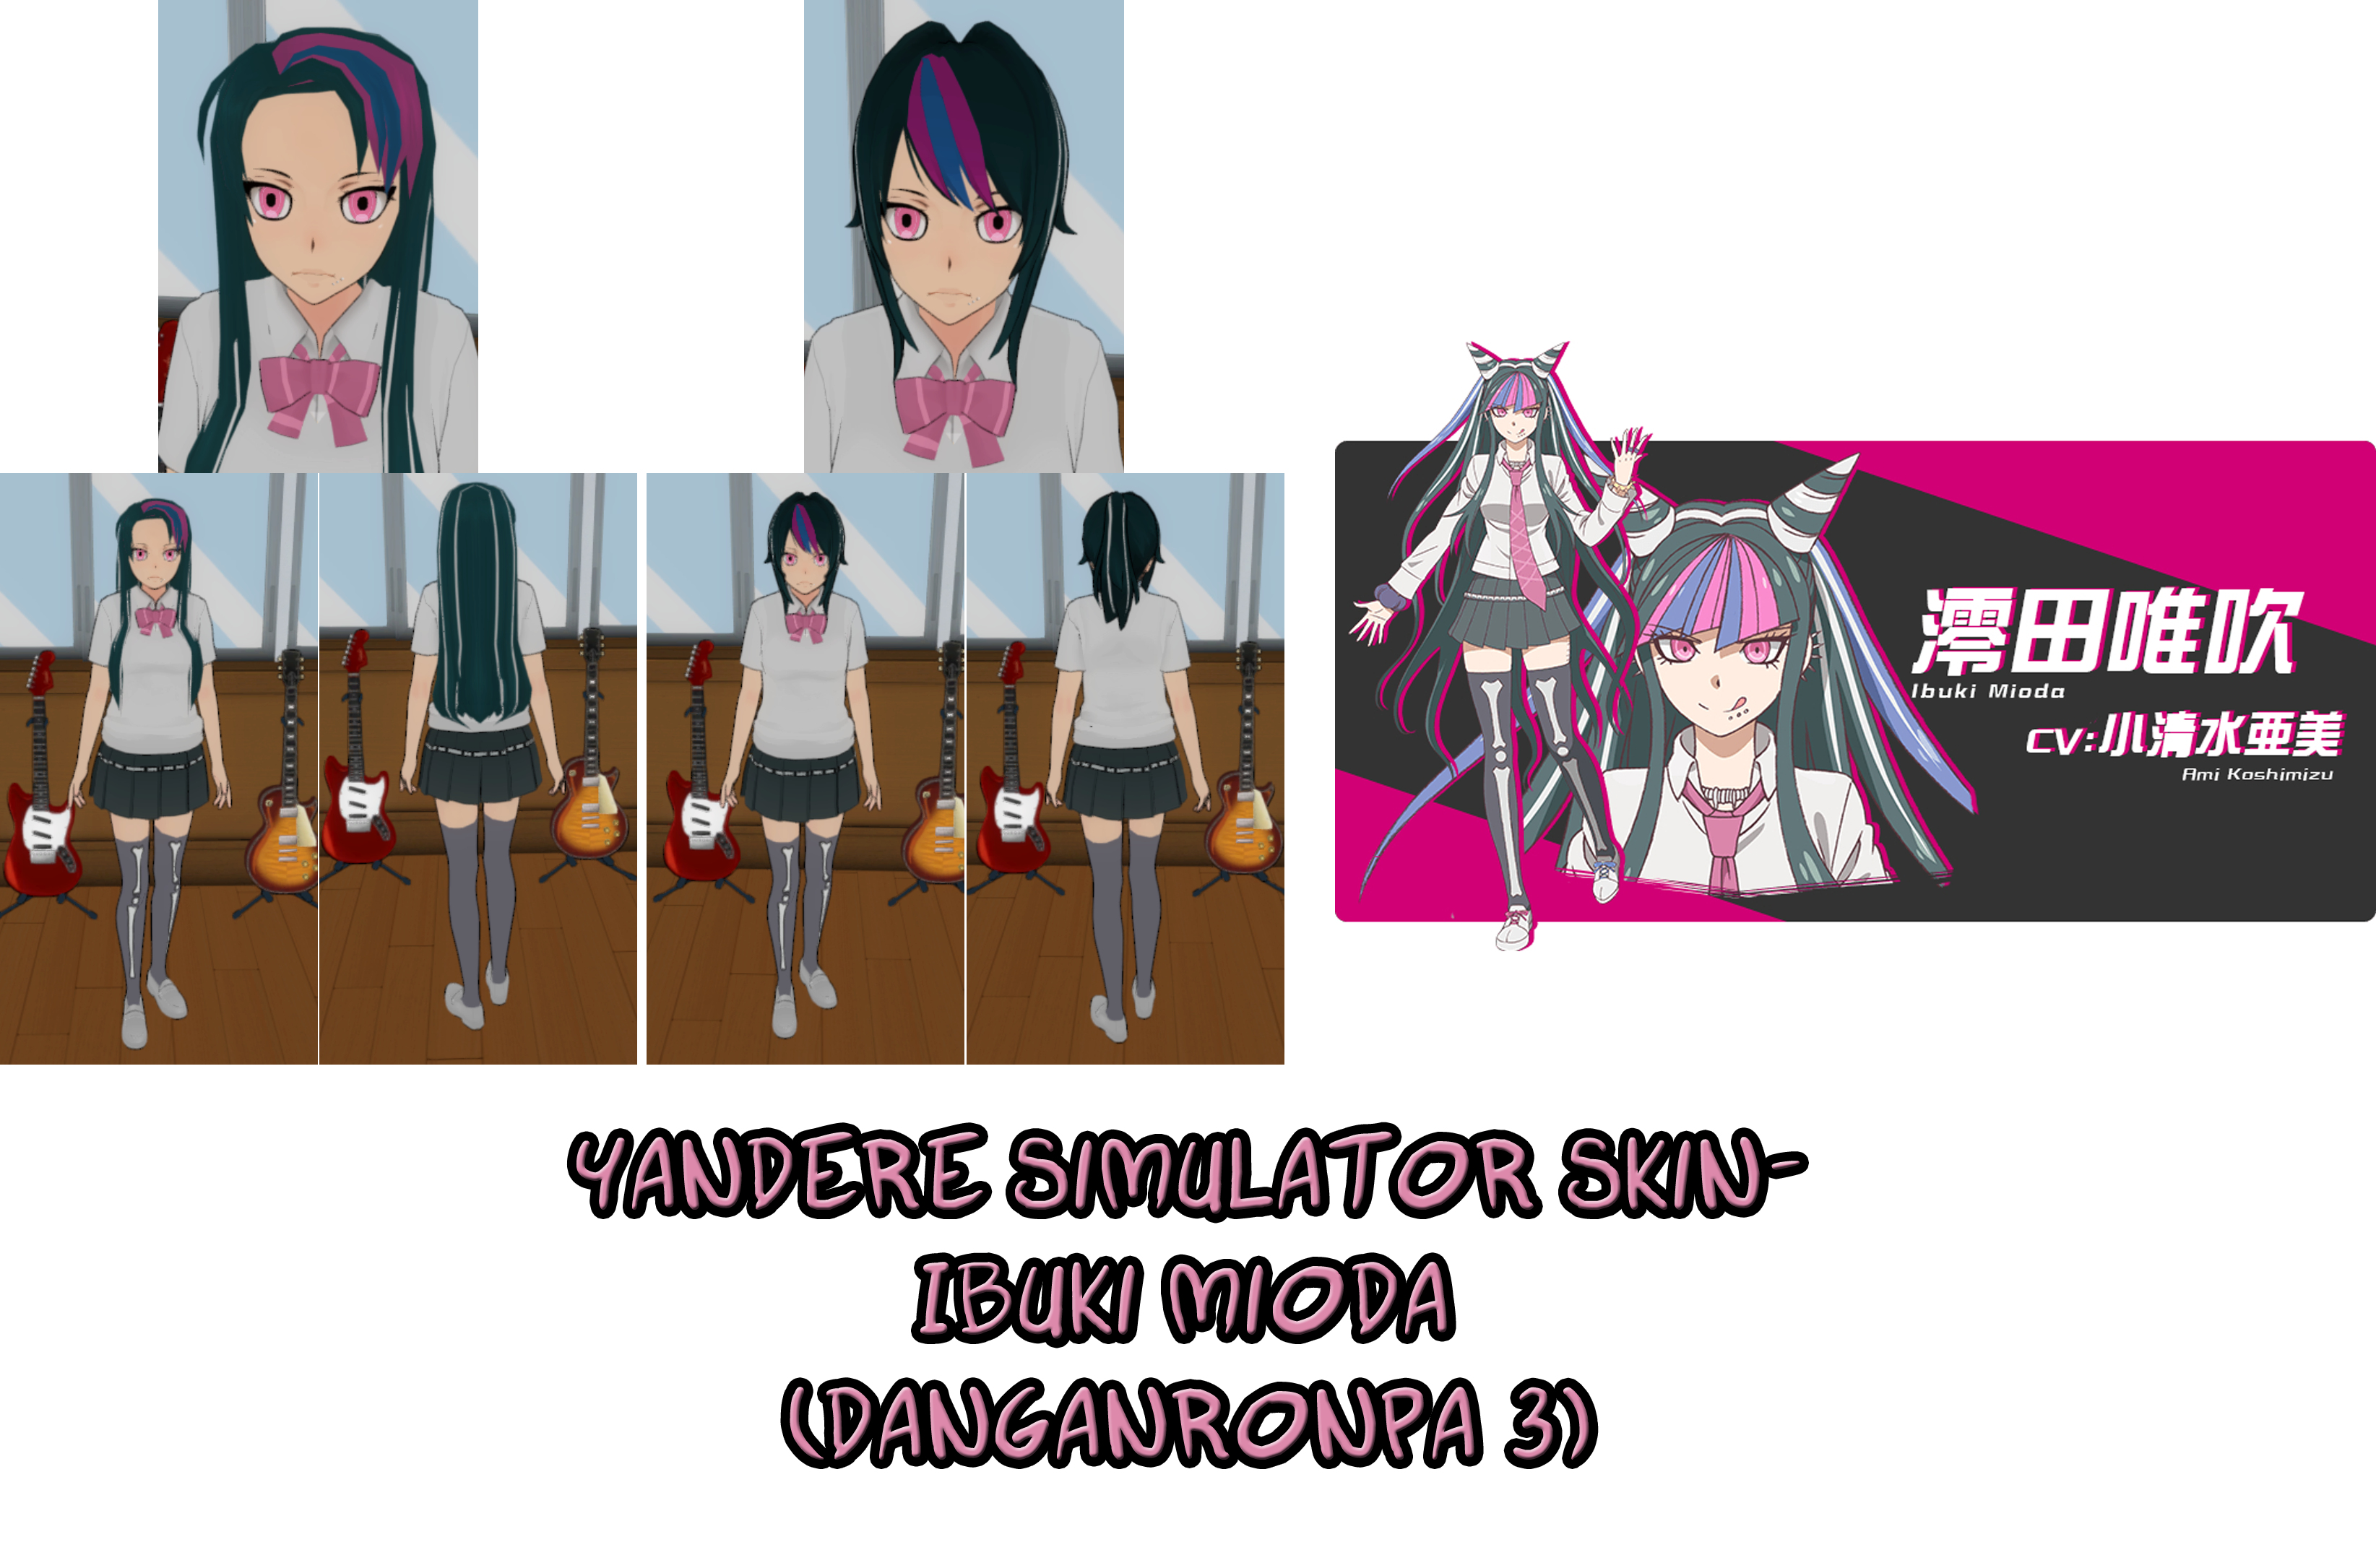 Yandere Simulator Ibuki Mioda Dr3 Skin By Imaginaryalchemist On